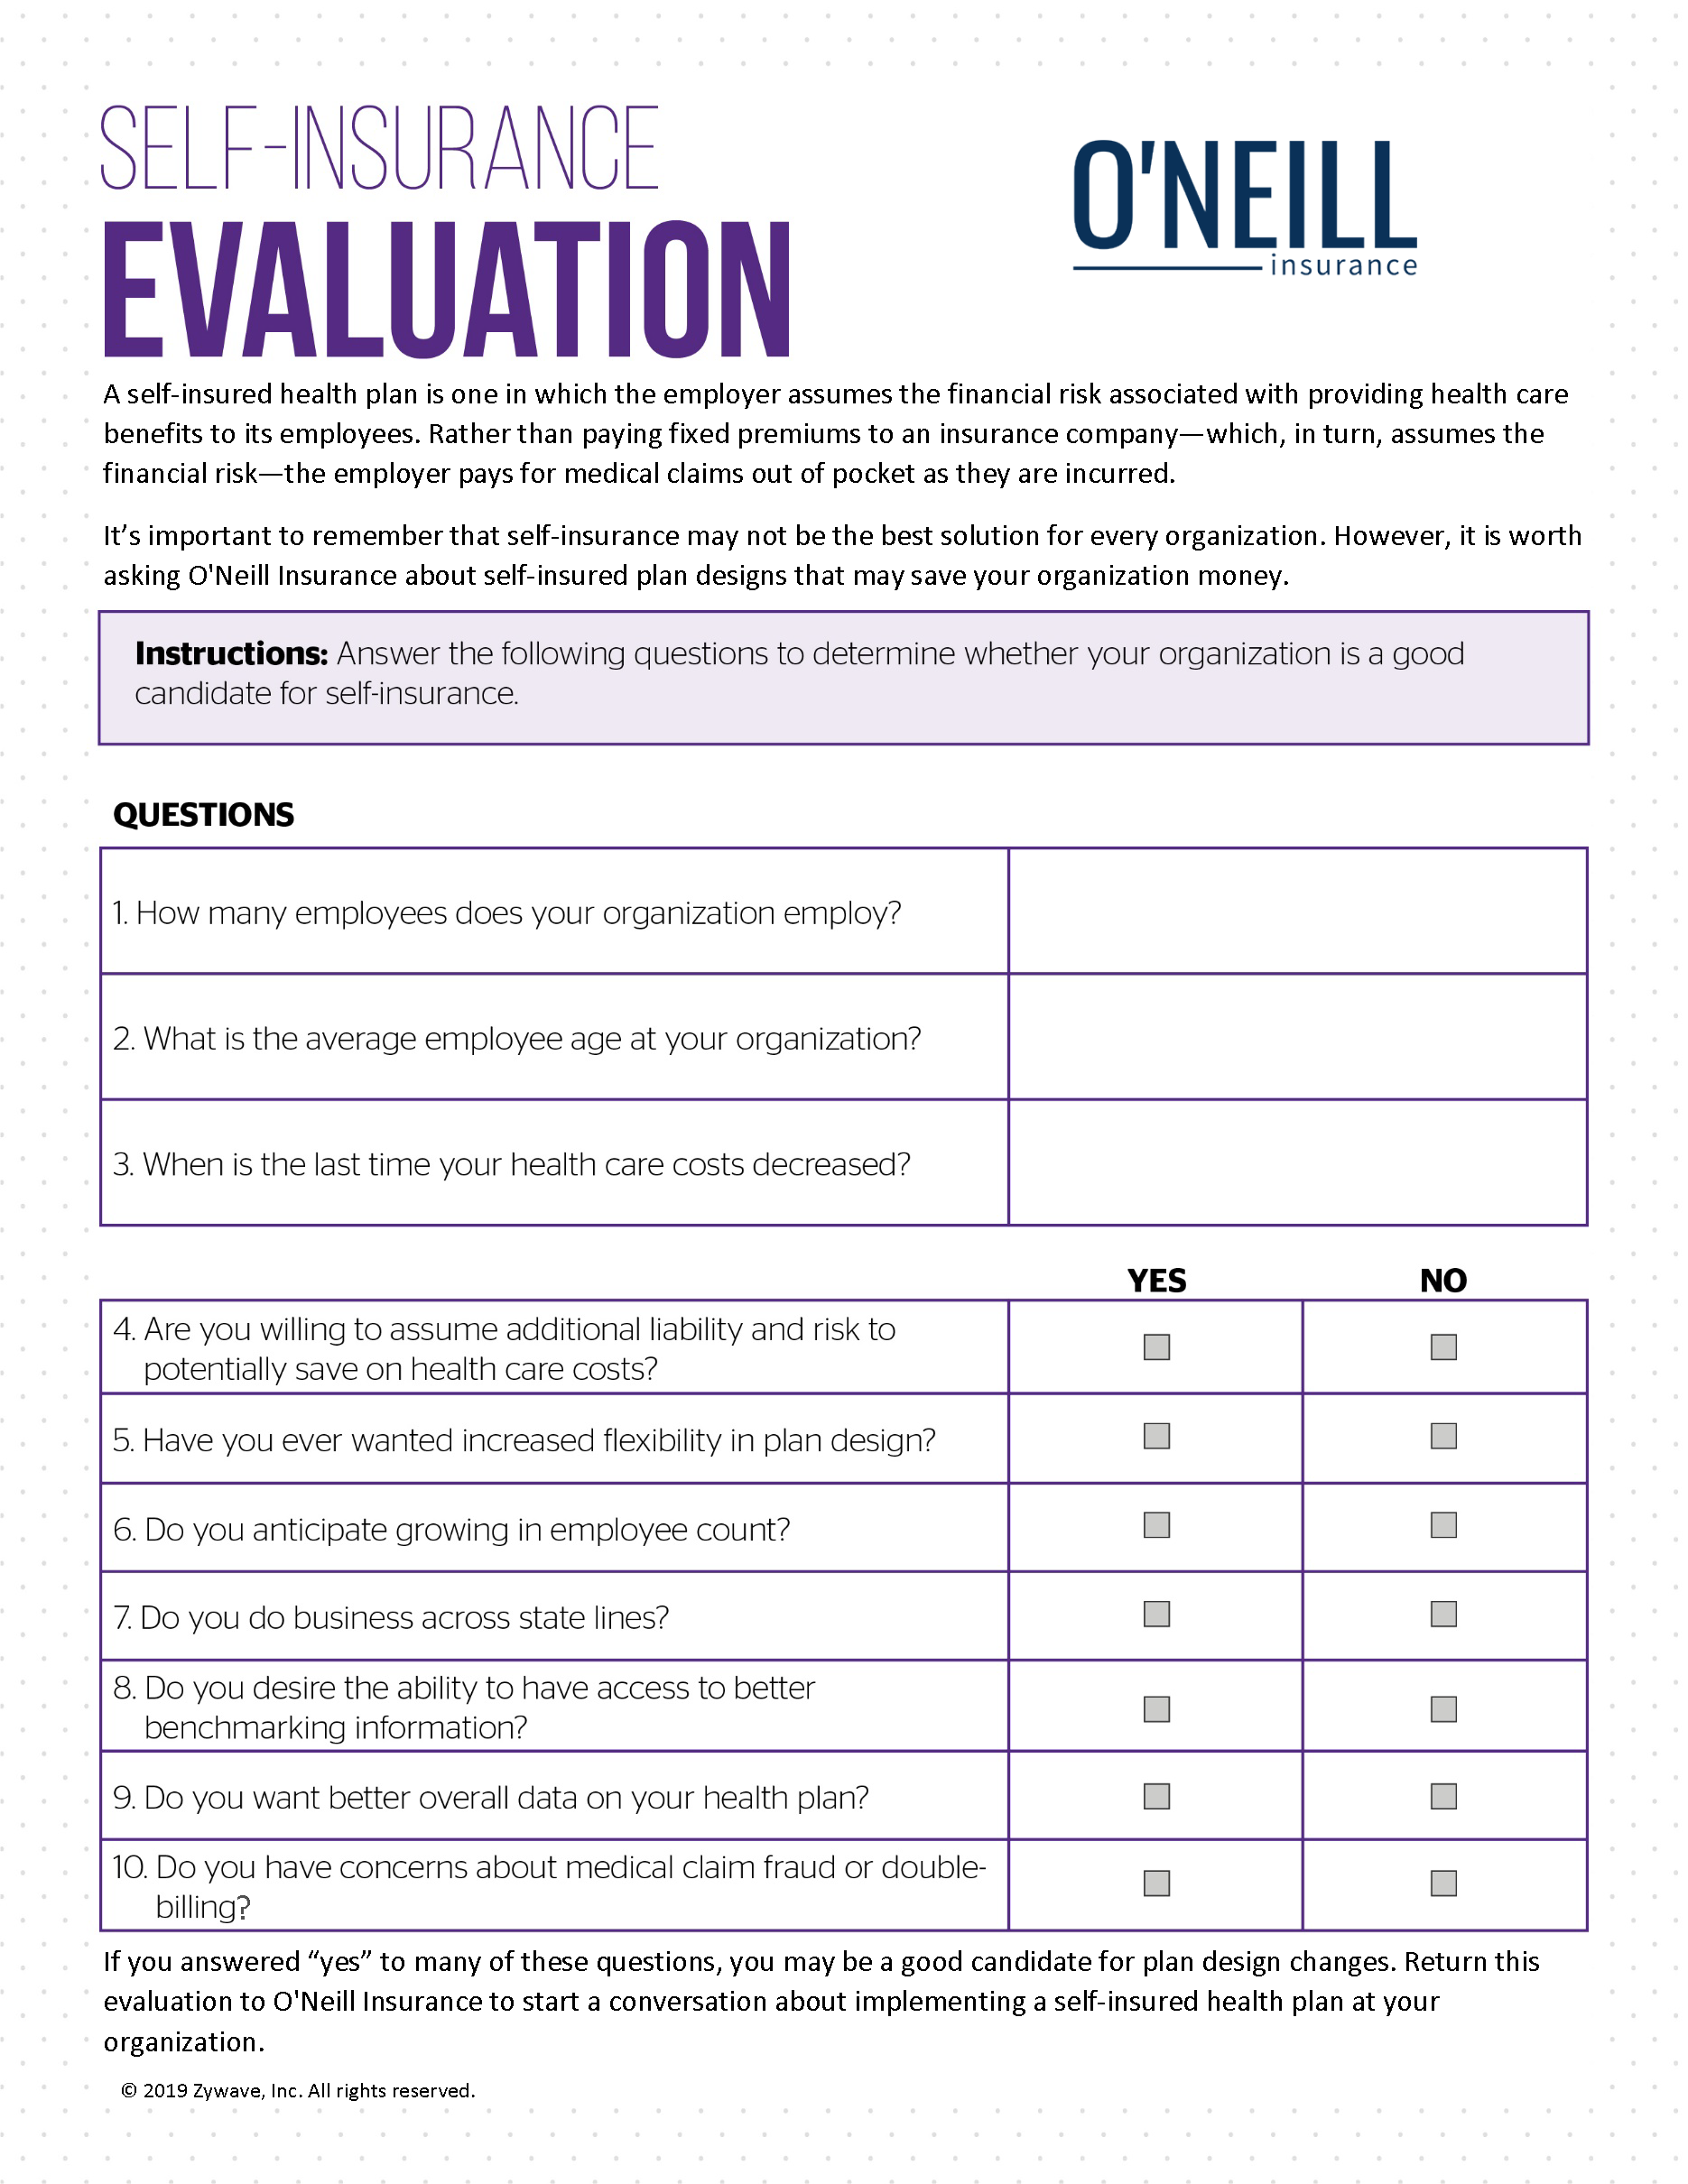 Self insured evaluation form